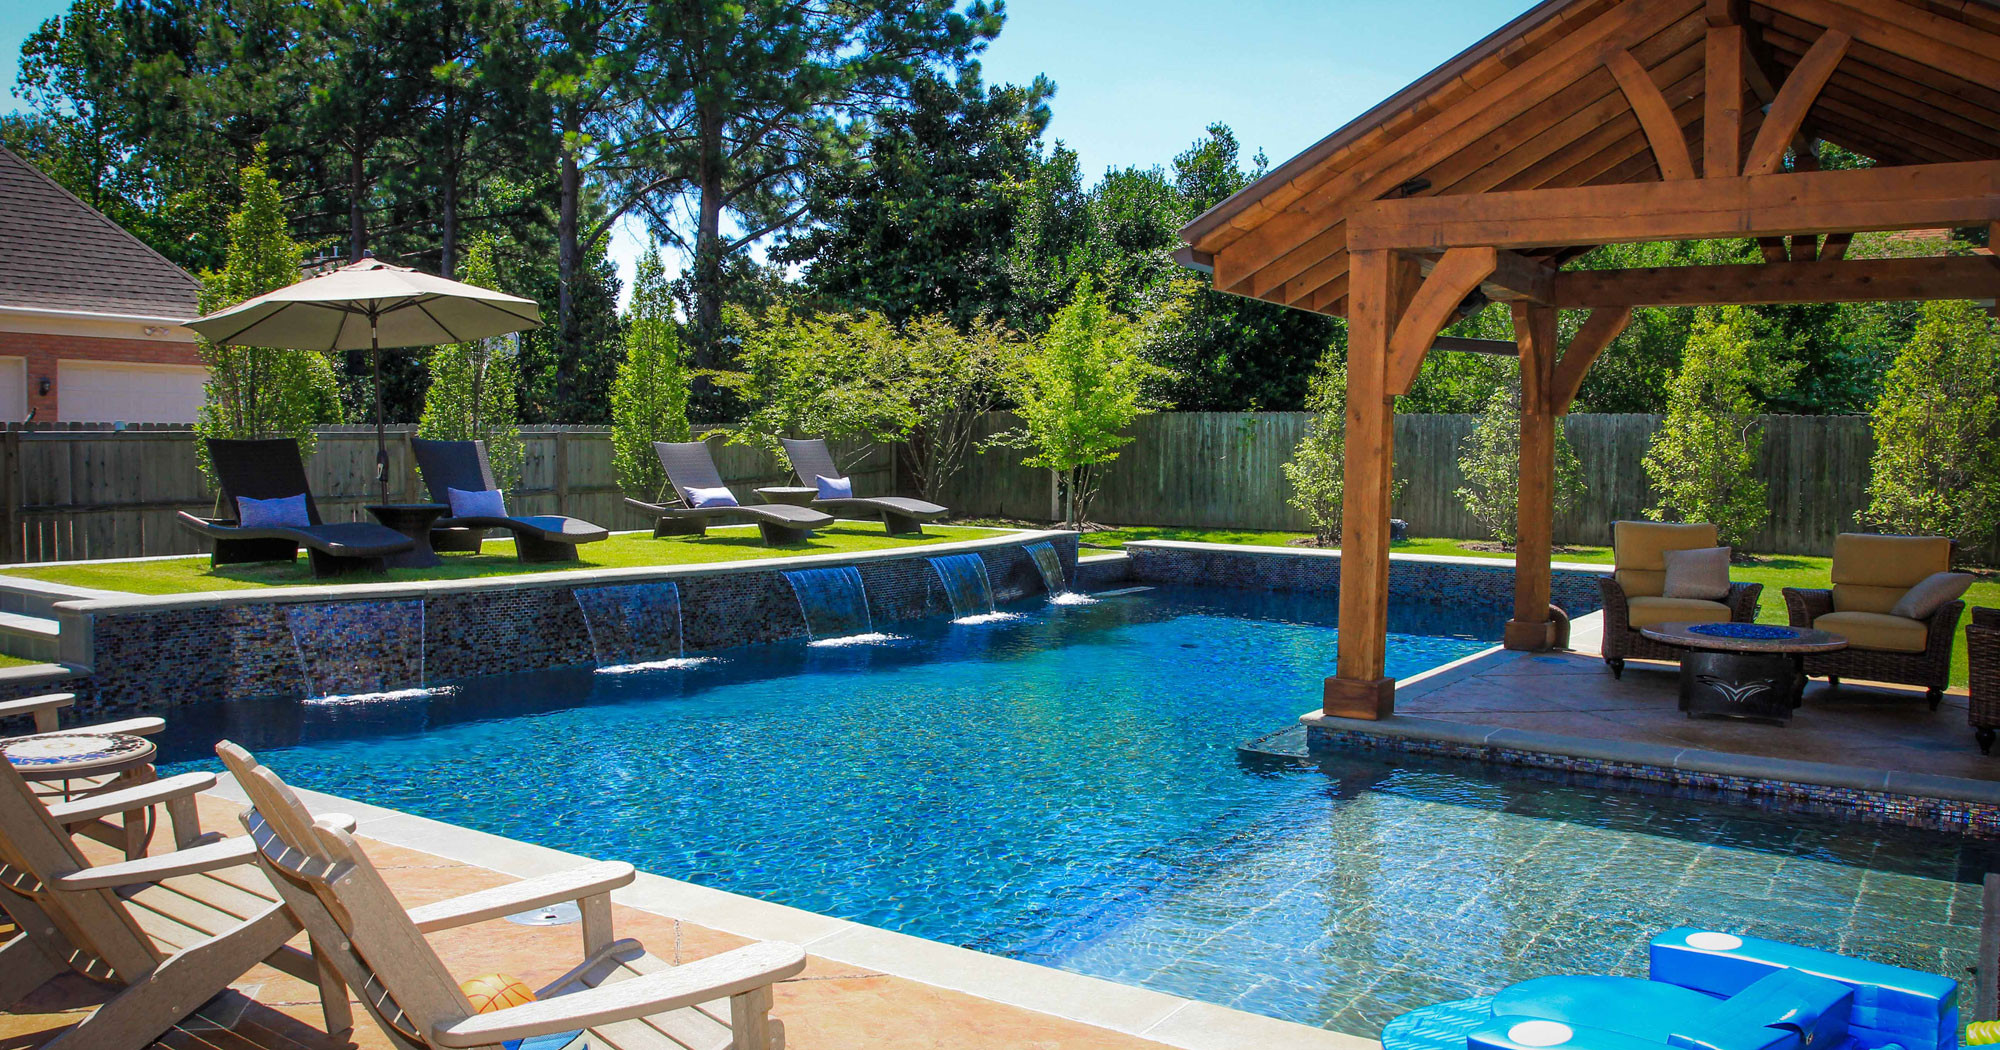 Pool Backyard Ideas
 20 Backyard Pool Ideas for the Wealthy Homeowner